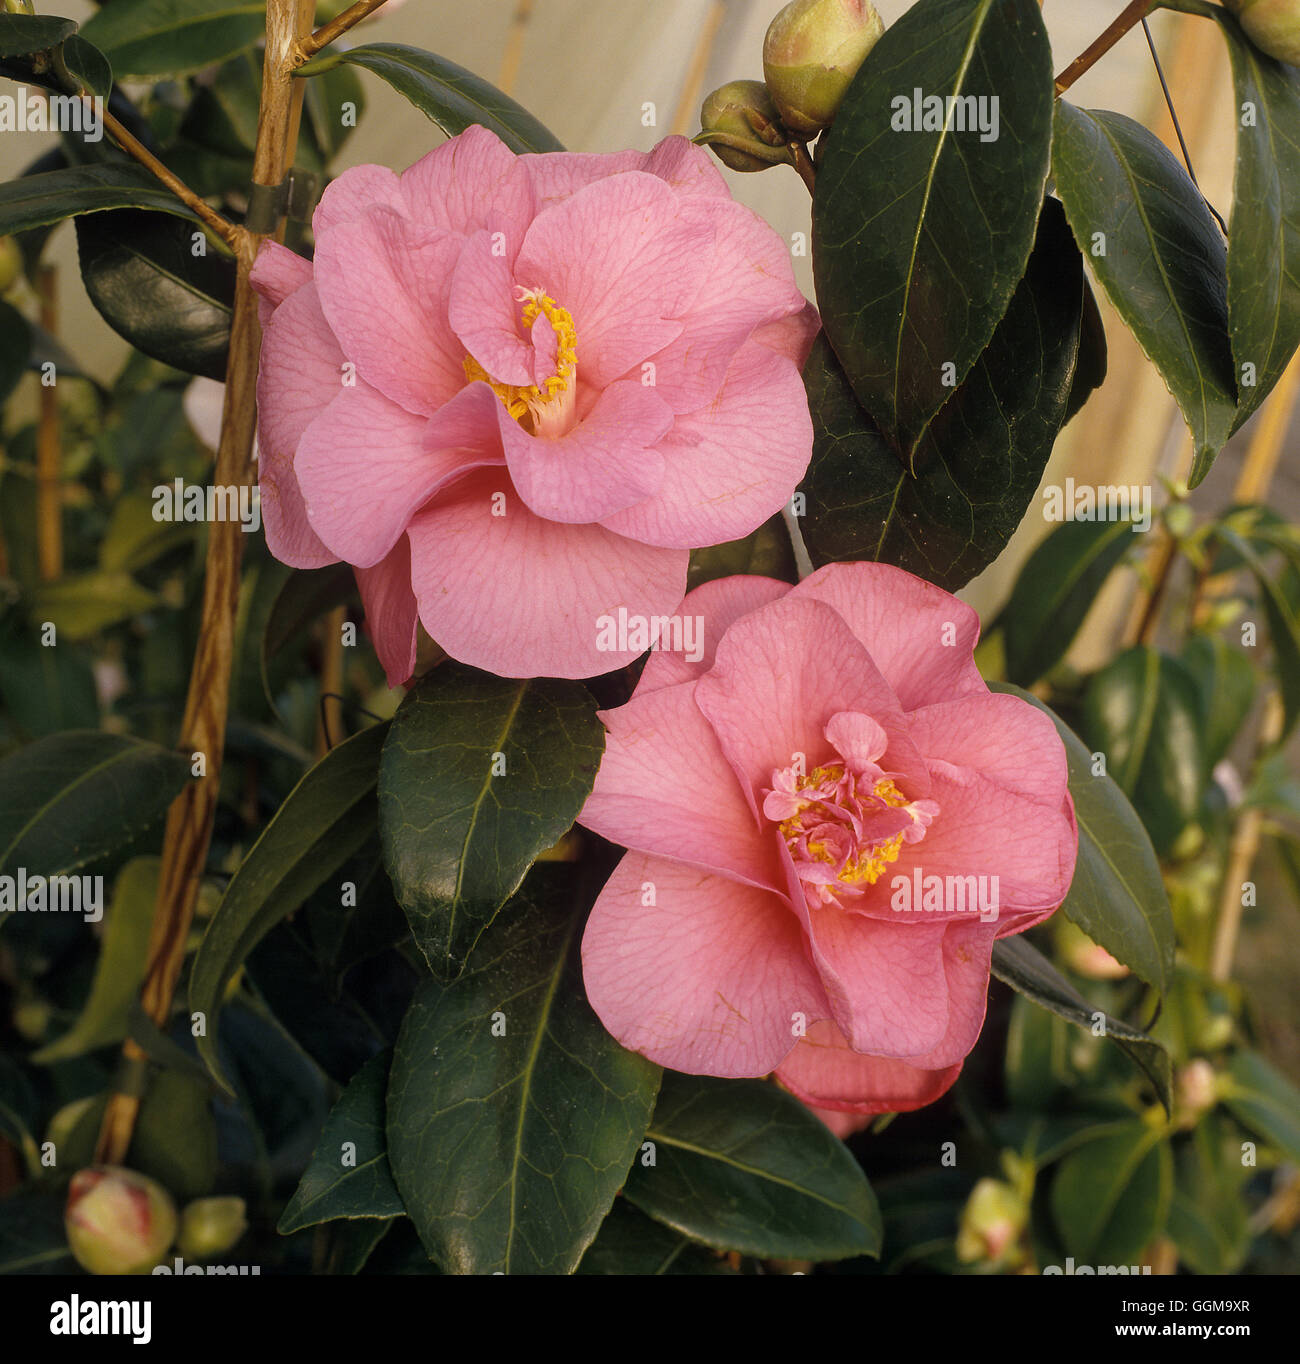 Camellia x williamsii 'Brigadoon'  Date: 13/10/2008  Ref: UMW 122062 0002 Stock Photo